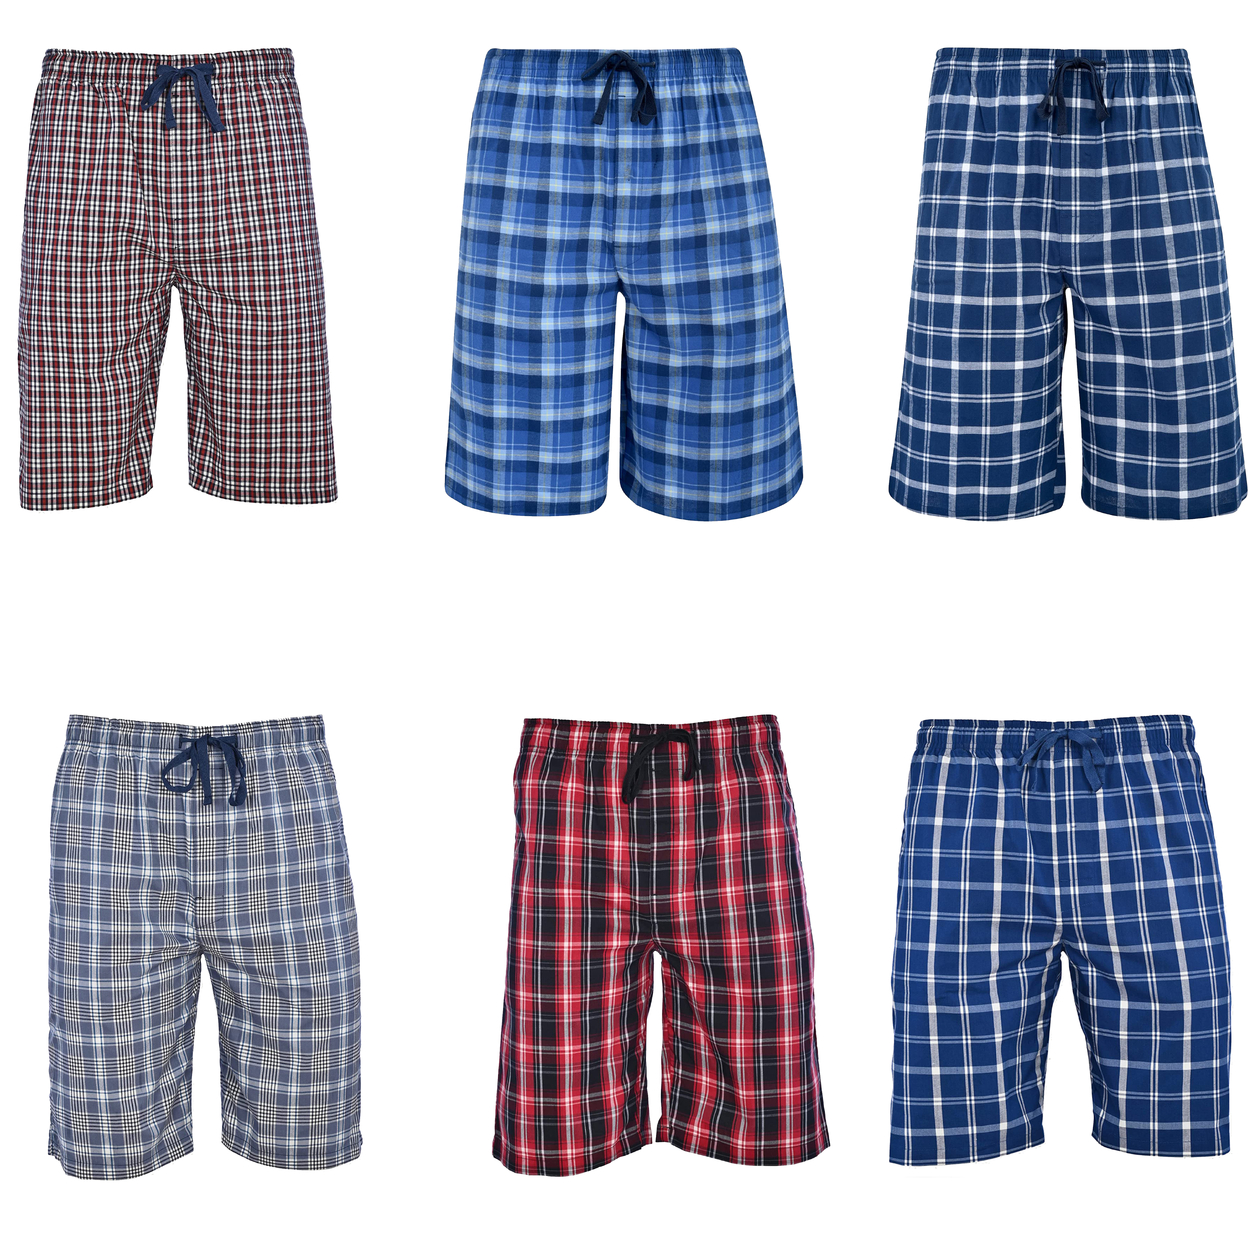 2-Pack: Men's Ultra Soft Plaid Lounge Pajama Sleep Wear Shorts - Black & Red, Small